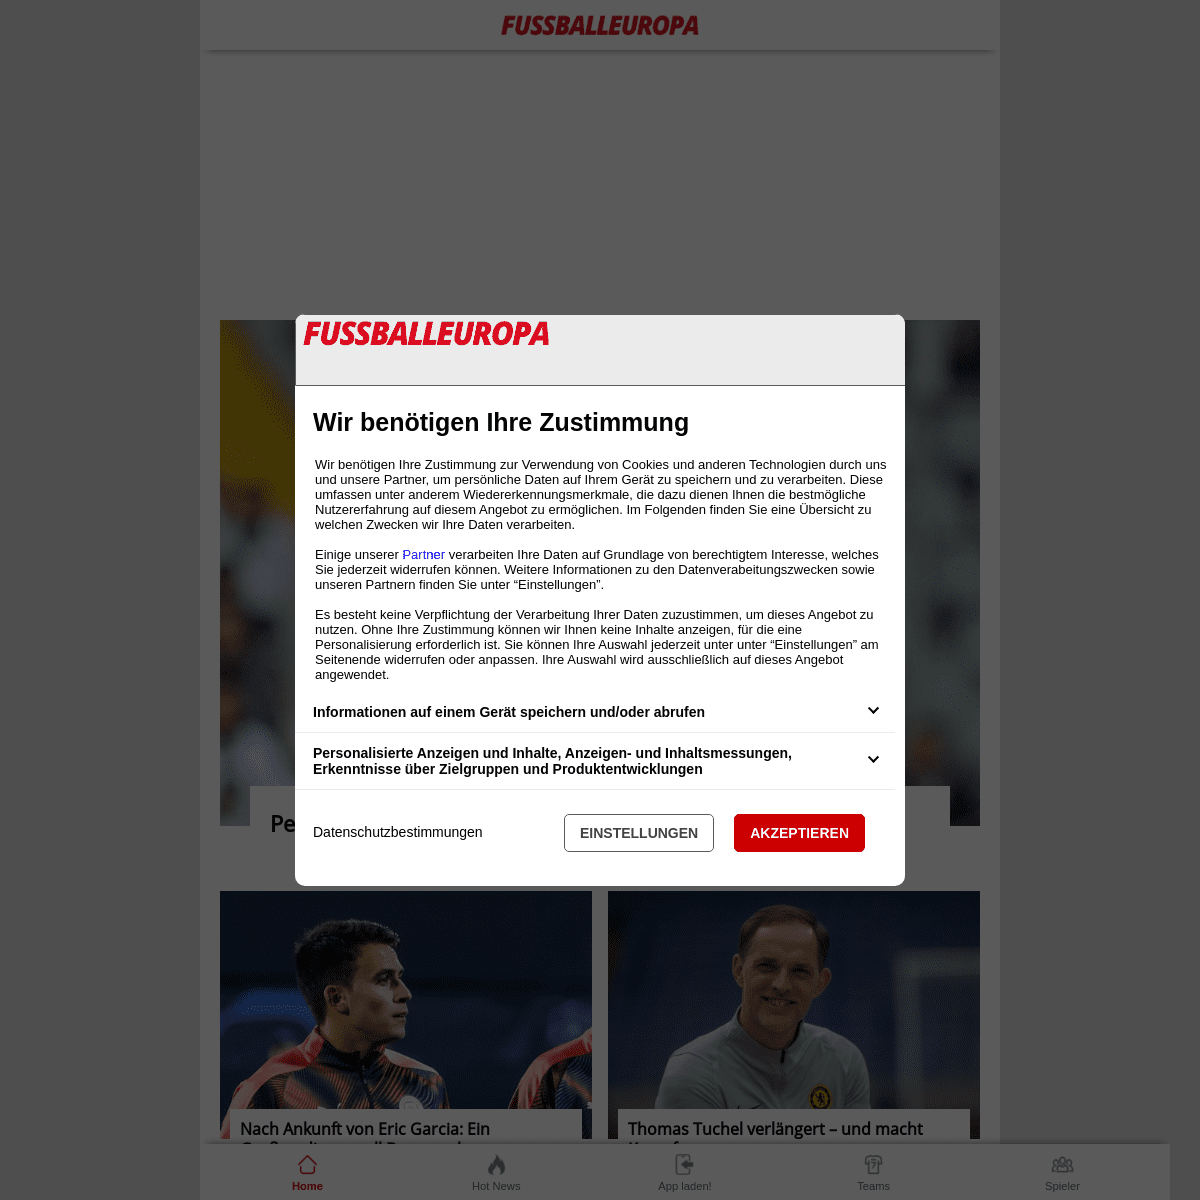 A complete backup of https://fussballeuropa.com